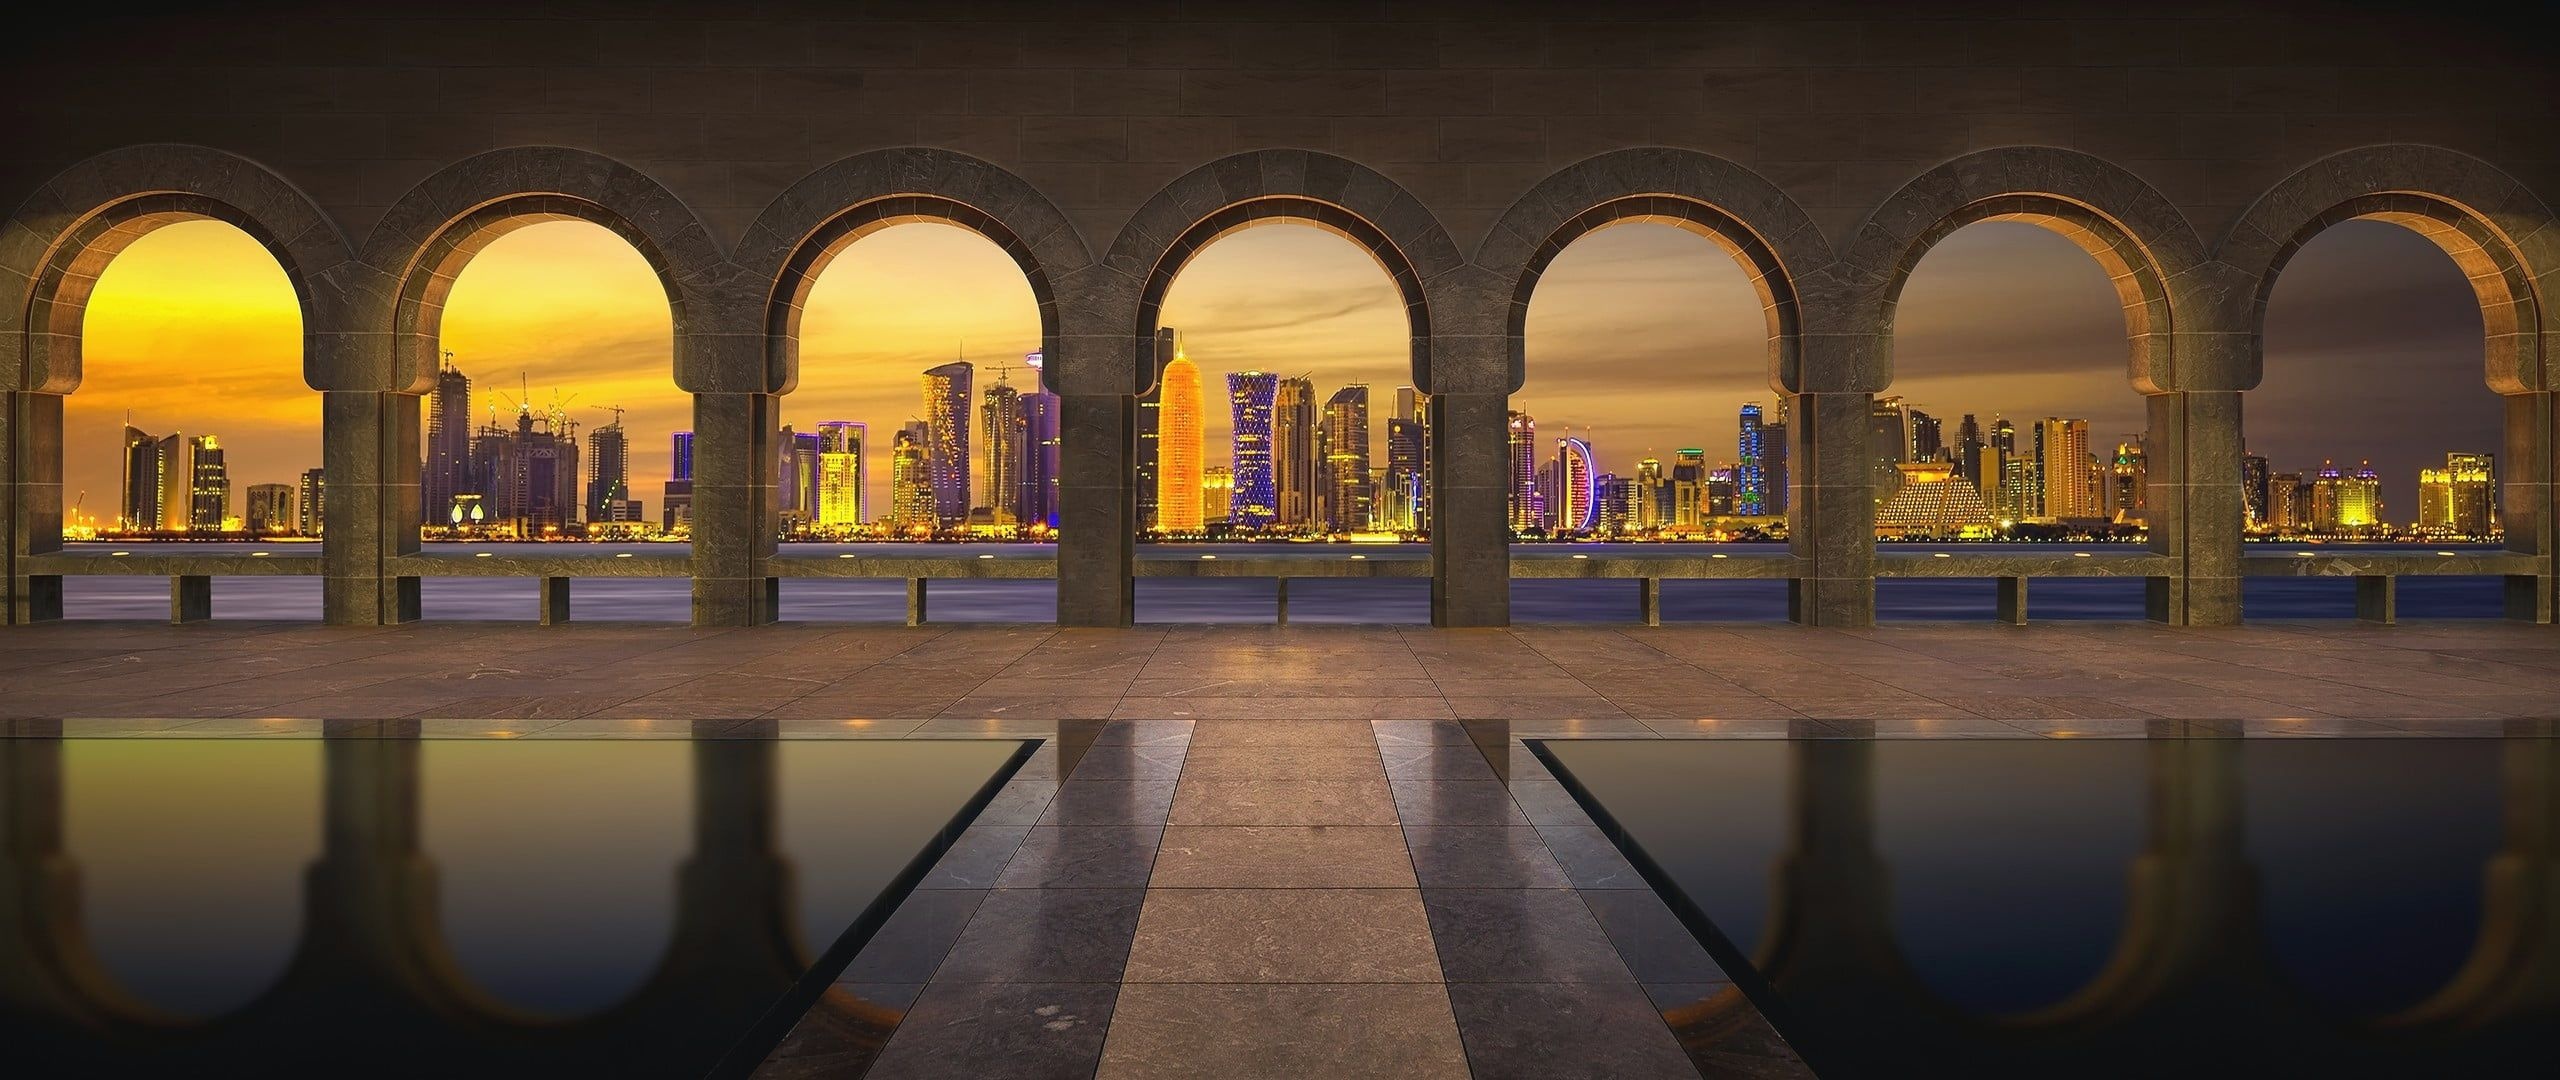 Qatar museum of Islamic art, Power tools, Qatar, 2560x1080 Dual Screen Desktop